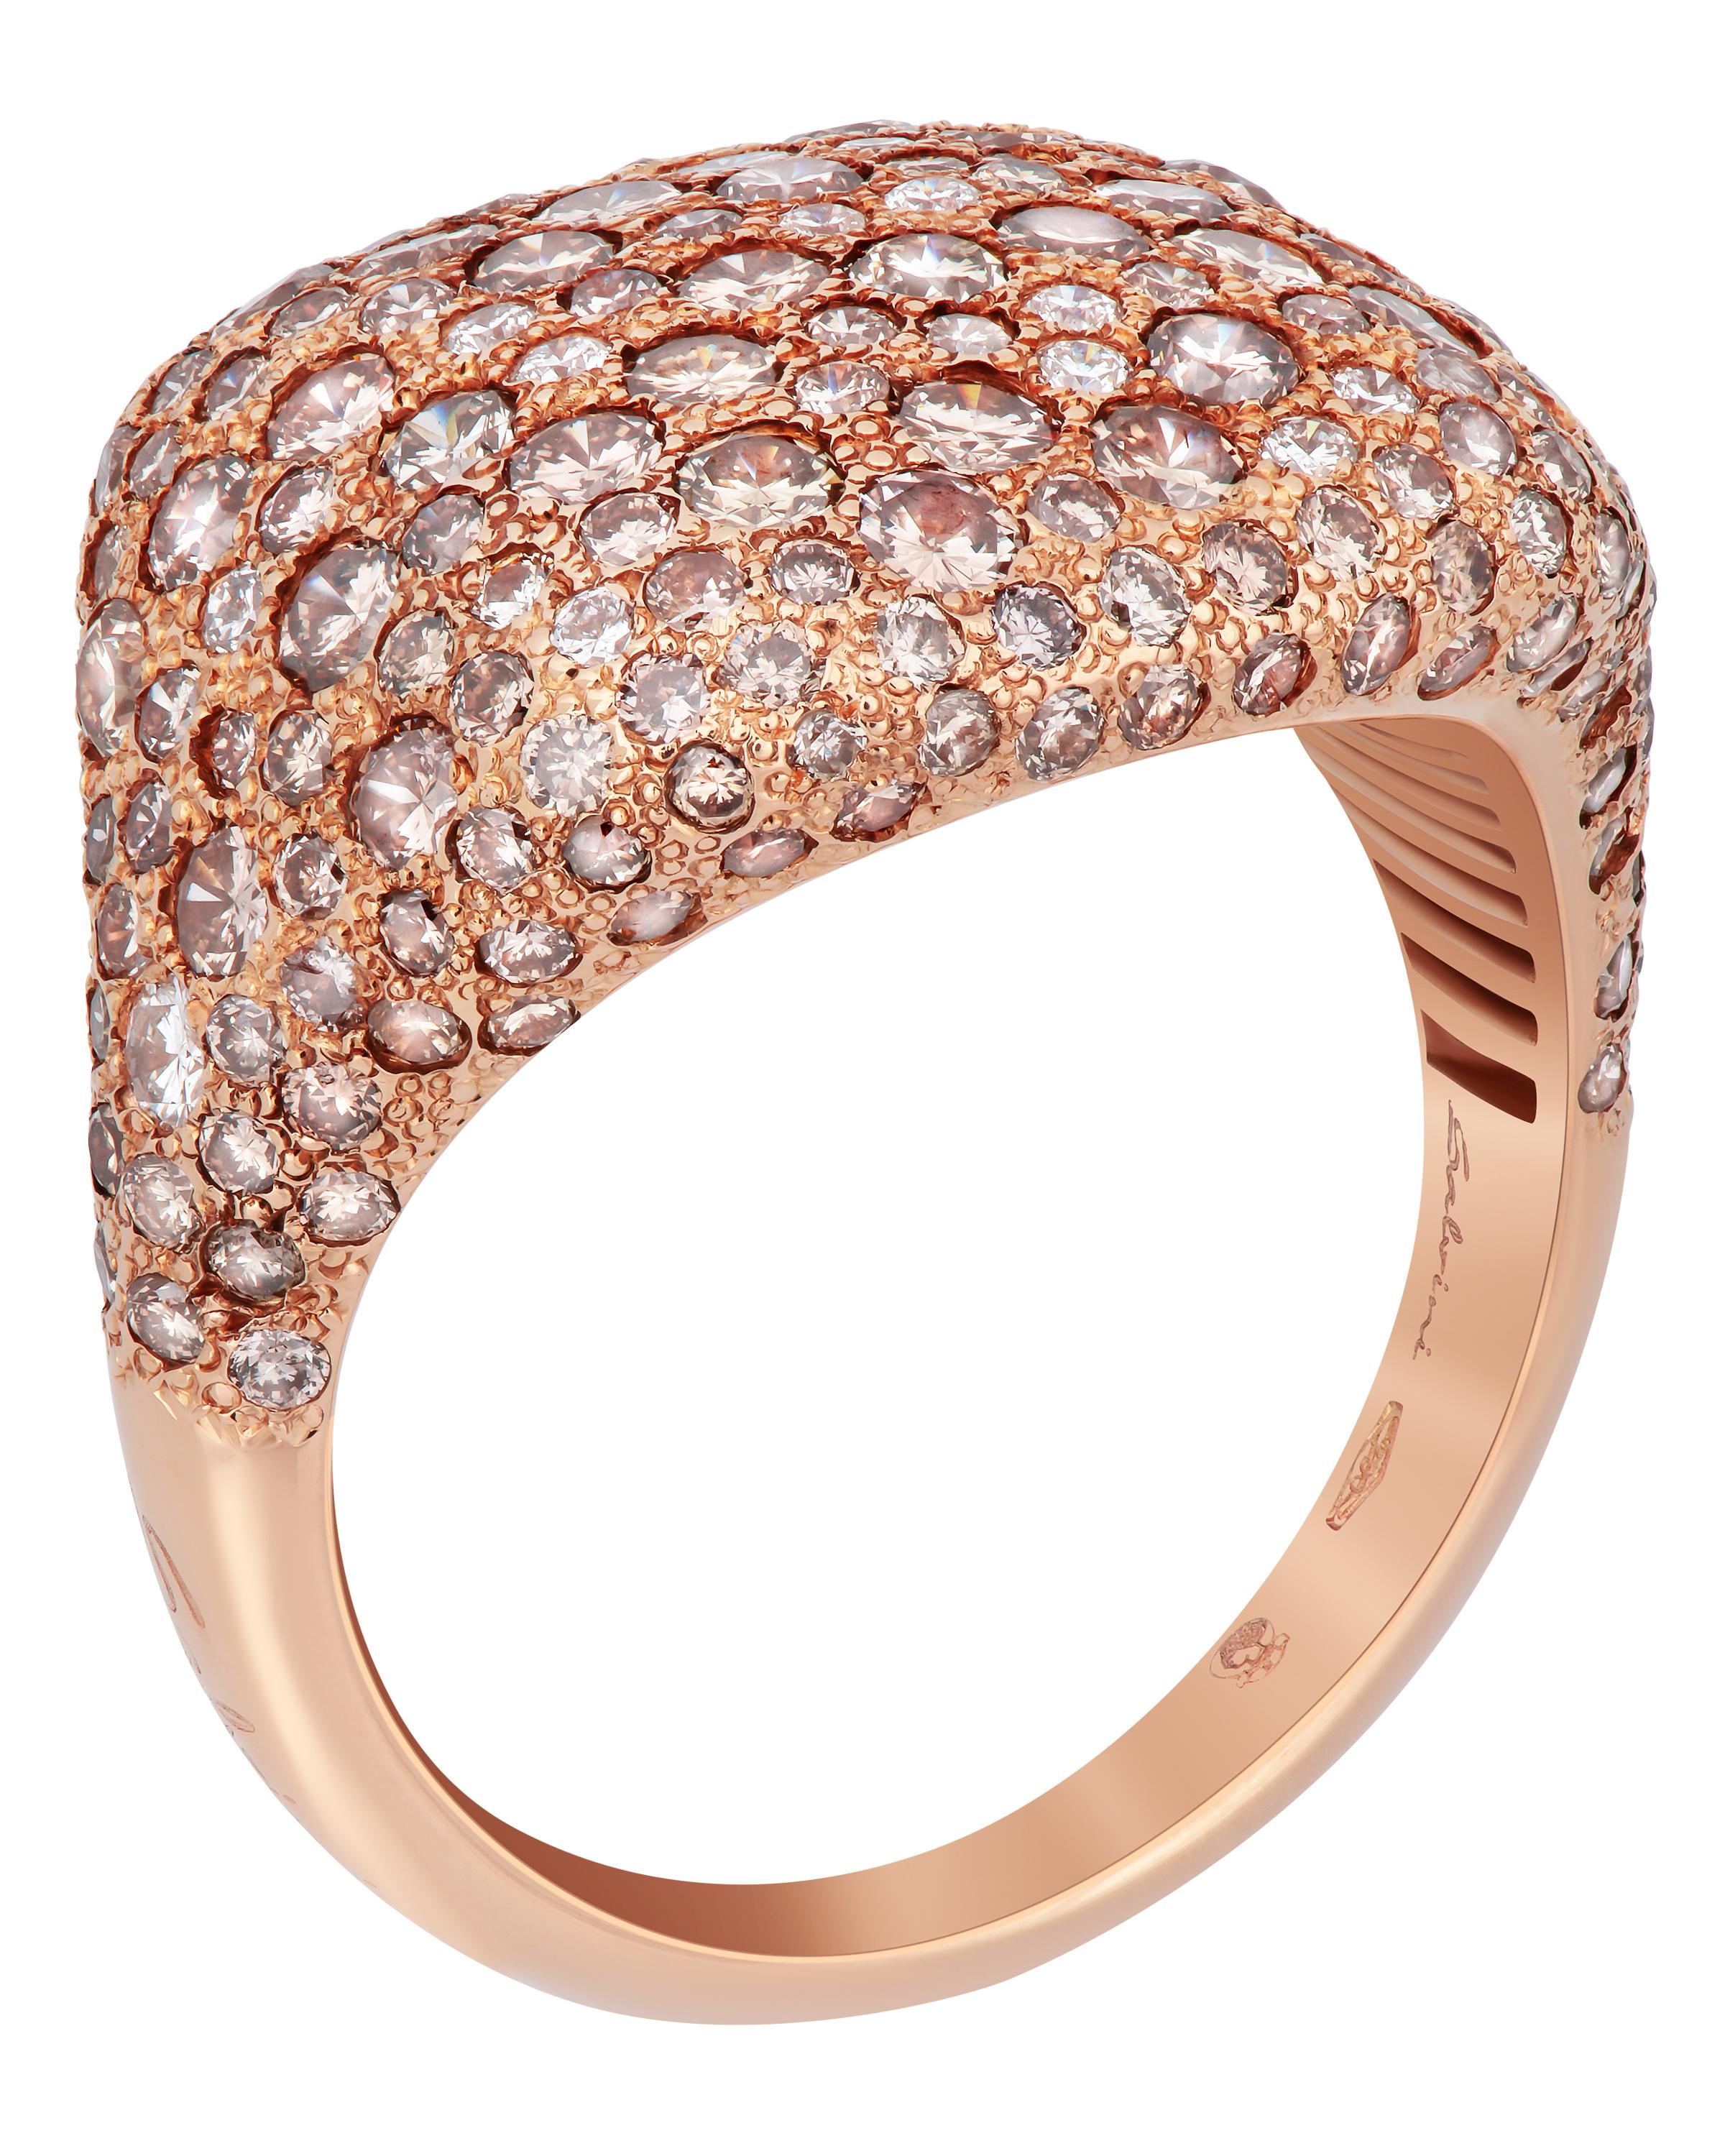 Contemporary SALVINI 18K Rose Gold, Diamond Signet Ring sz 6.75 For Sale